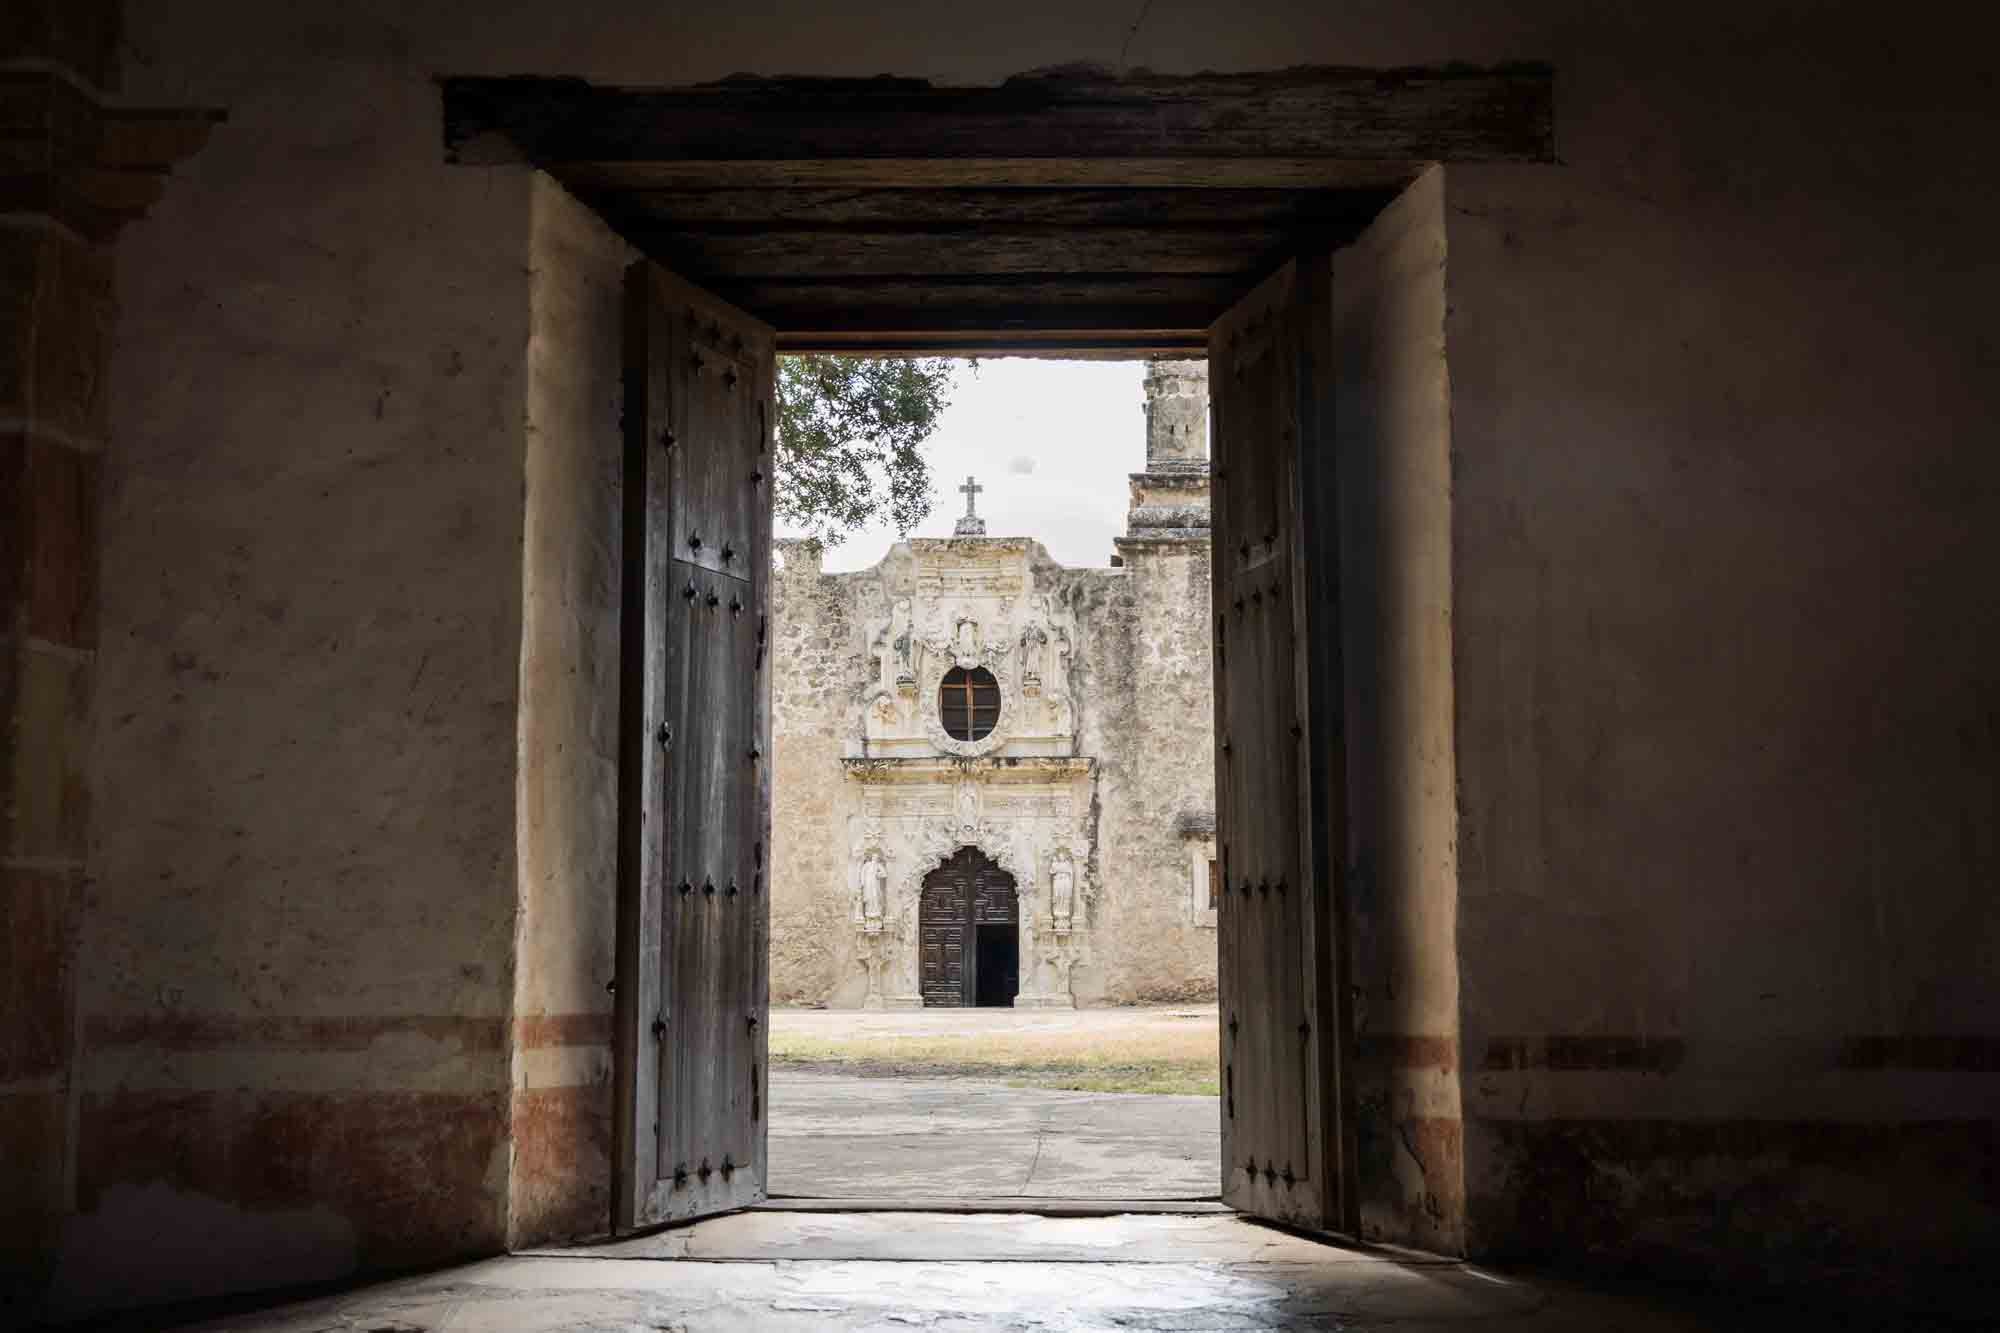 Facade of church in Mission San Juan seen through doorway in San Antonio